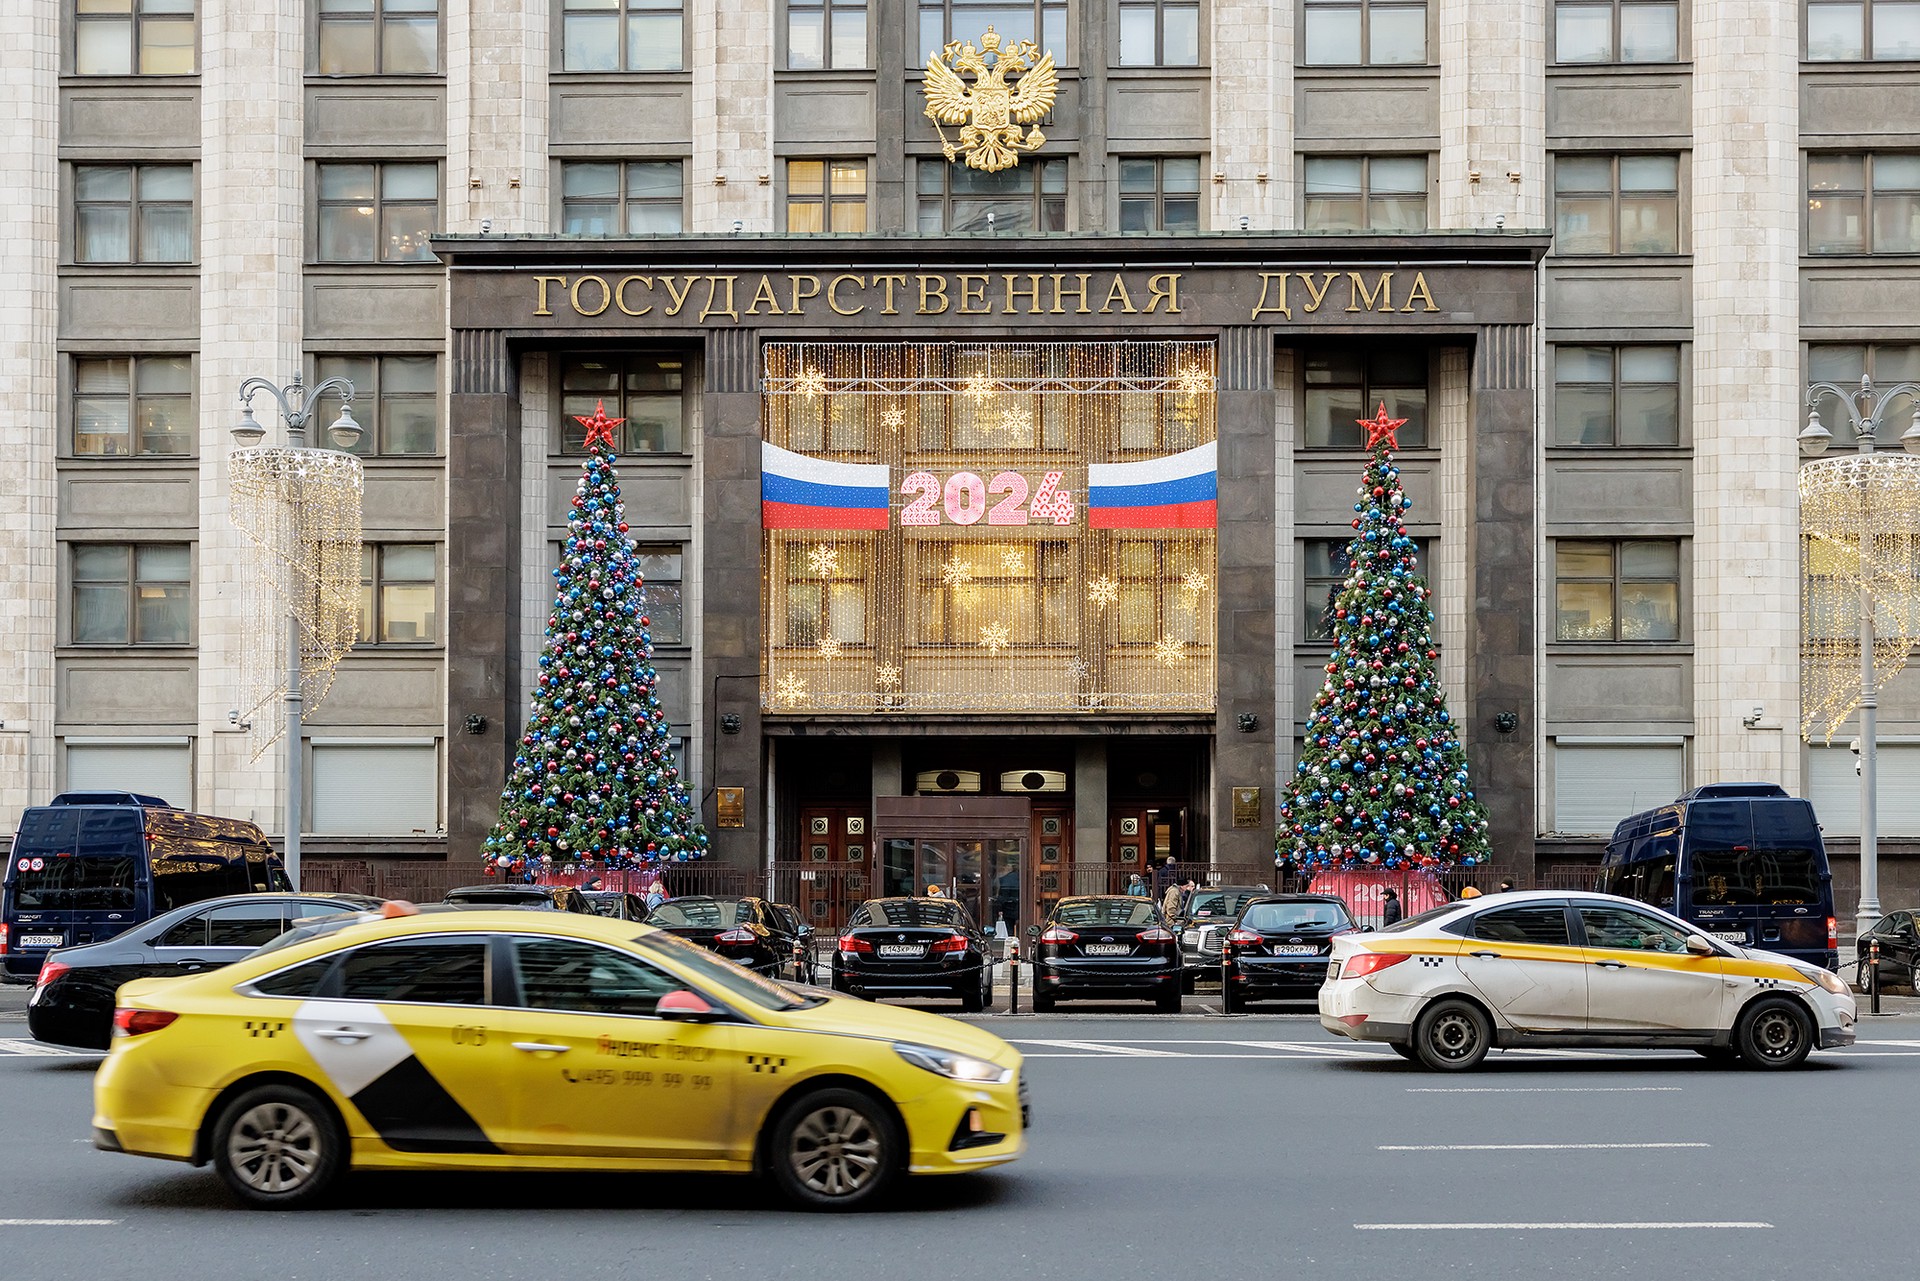 В Госдуму внесут законопроект о конфискации имущества за фейки о ВС РФ 22 января